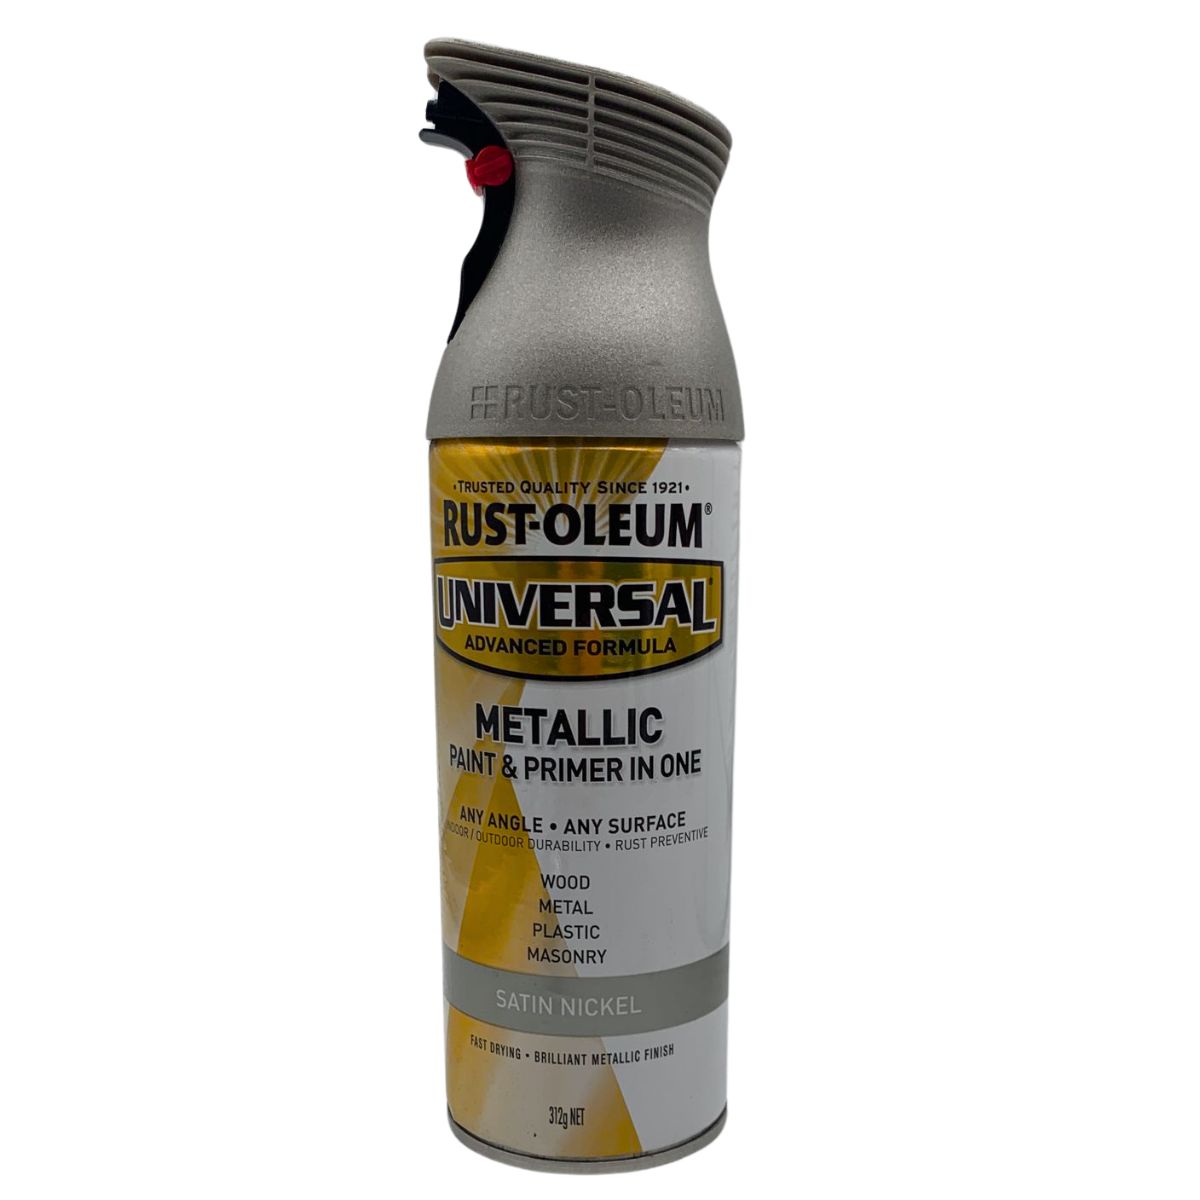 Rust Oleum Universal Metallic Spray Paint | 252886 Satin Nickel - South East Clearance Centre